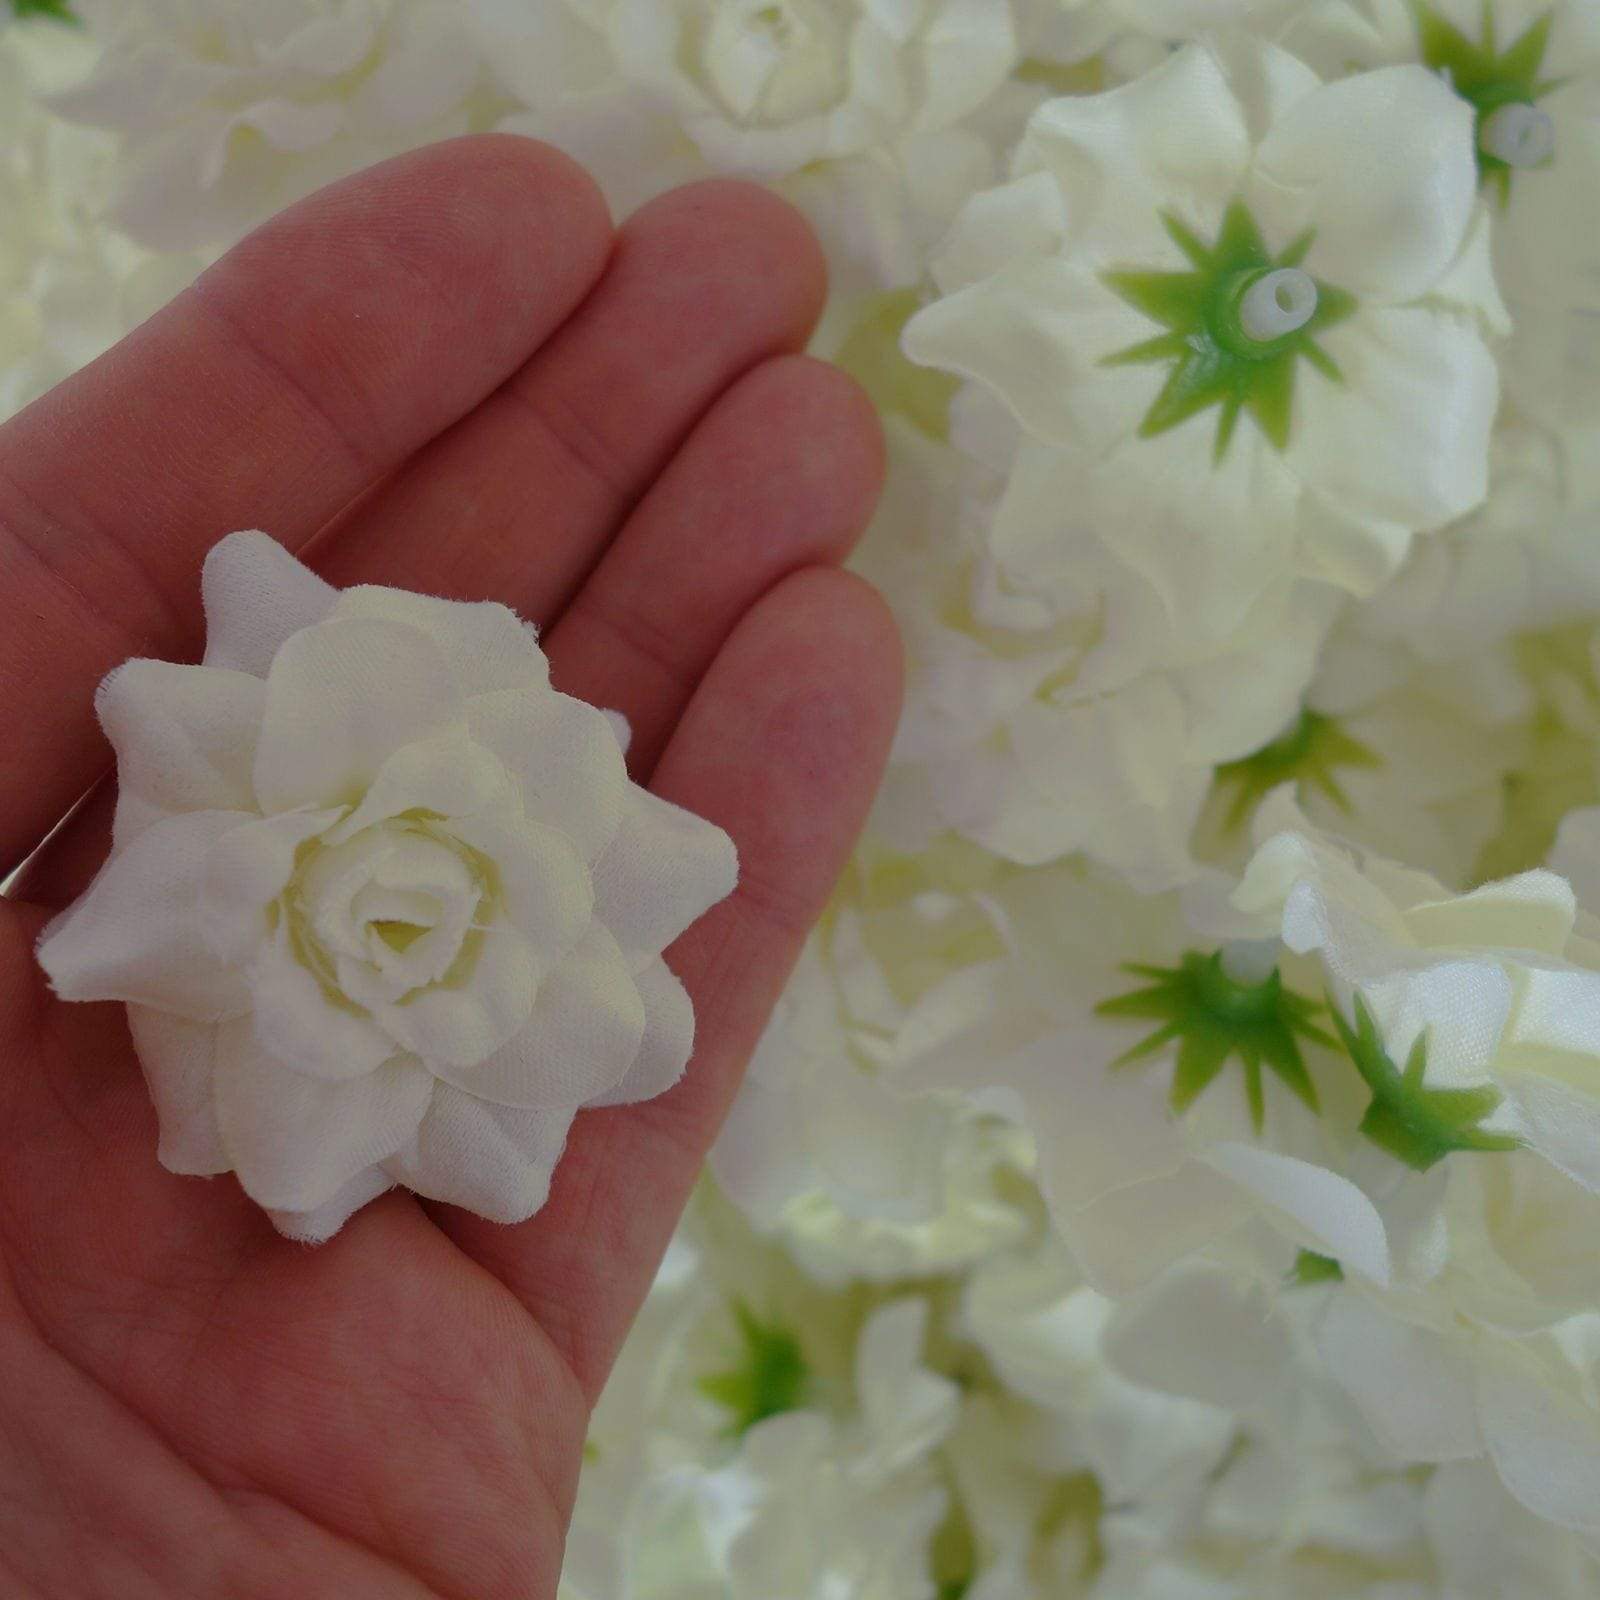 24 Bulk Artificial White Cream Roses Fabric Flower Heads for Hair Clips Head Bands